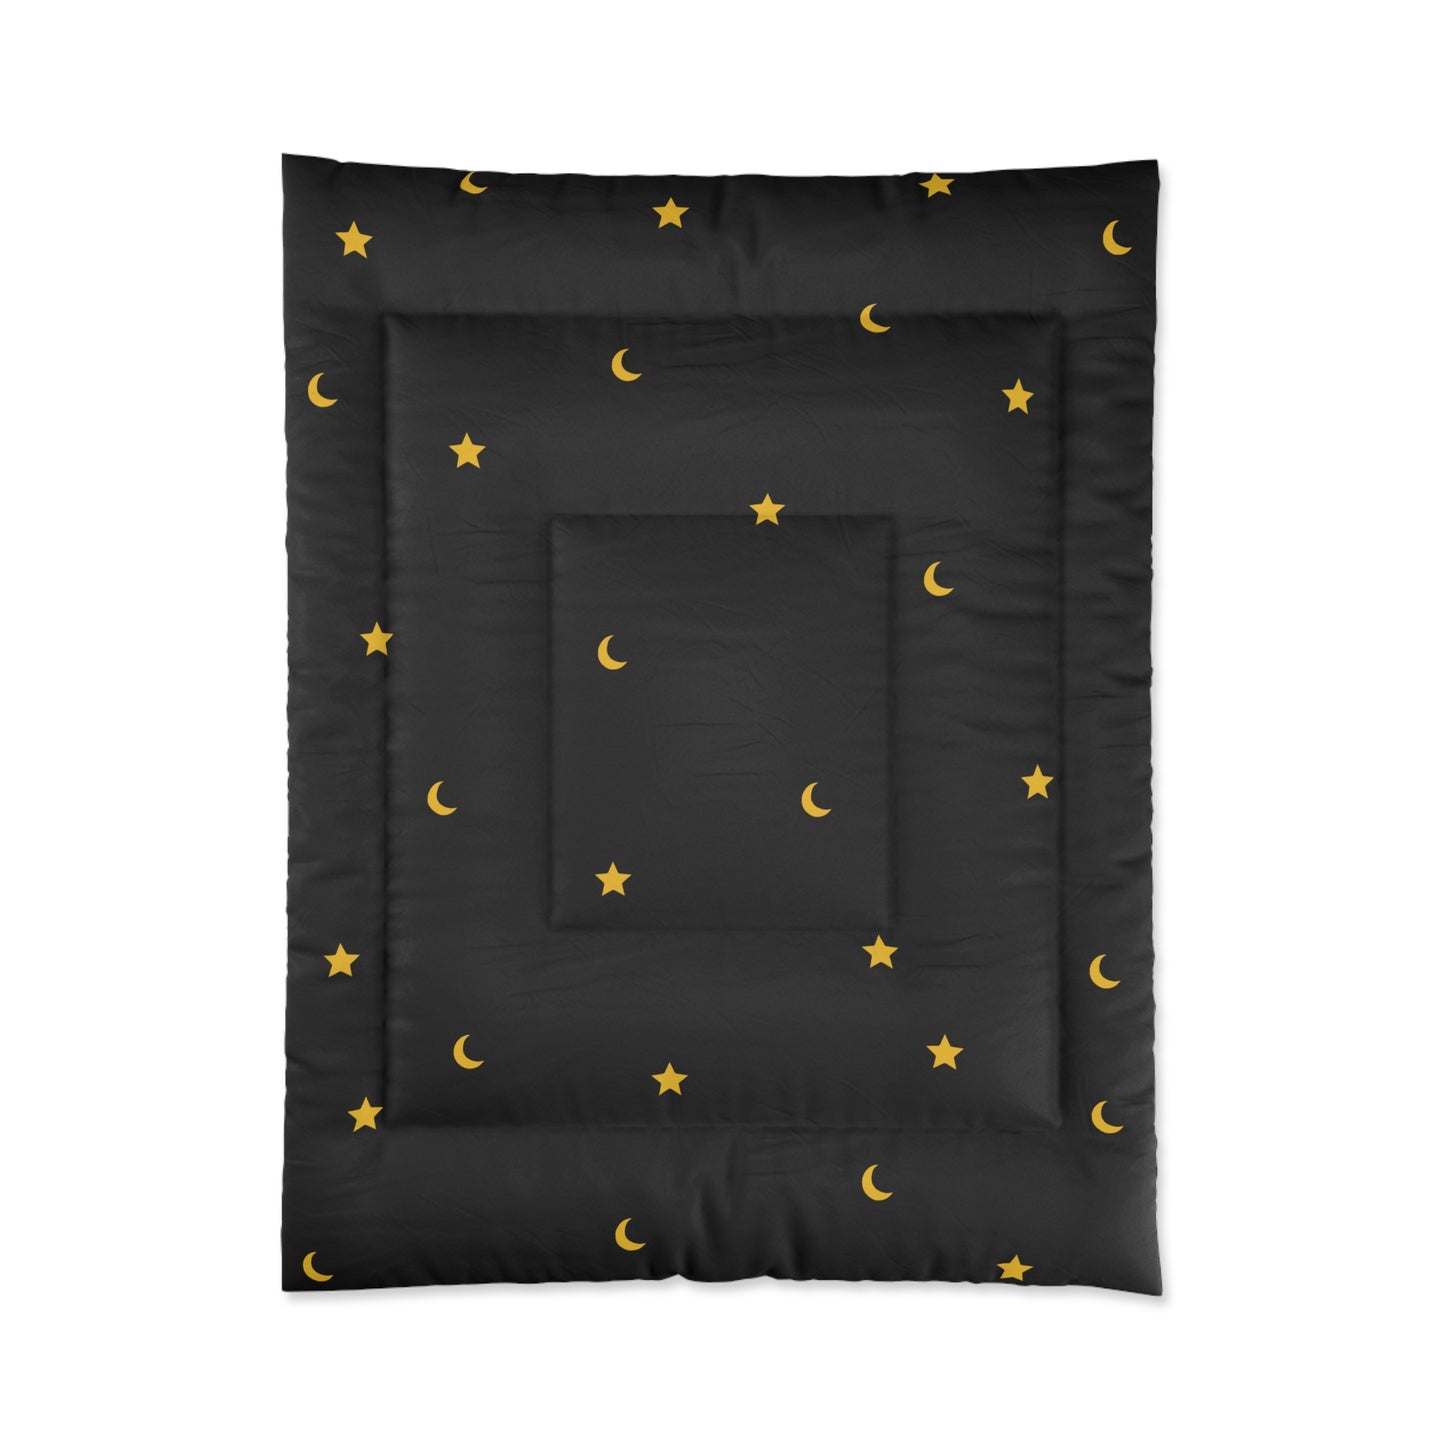 Simplicity Moon & Star Comforter